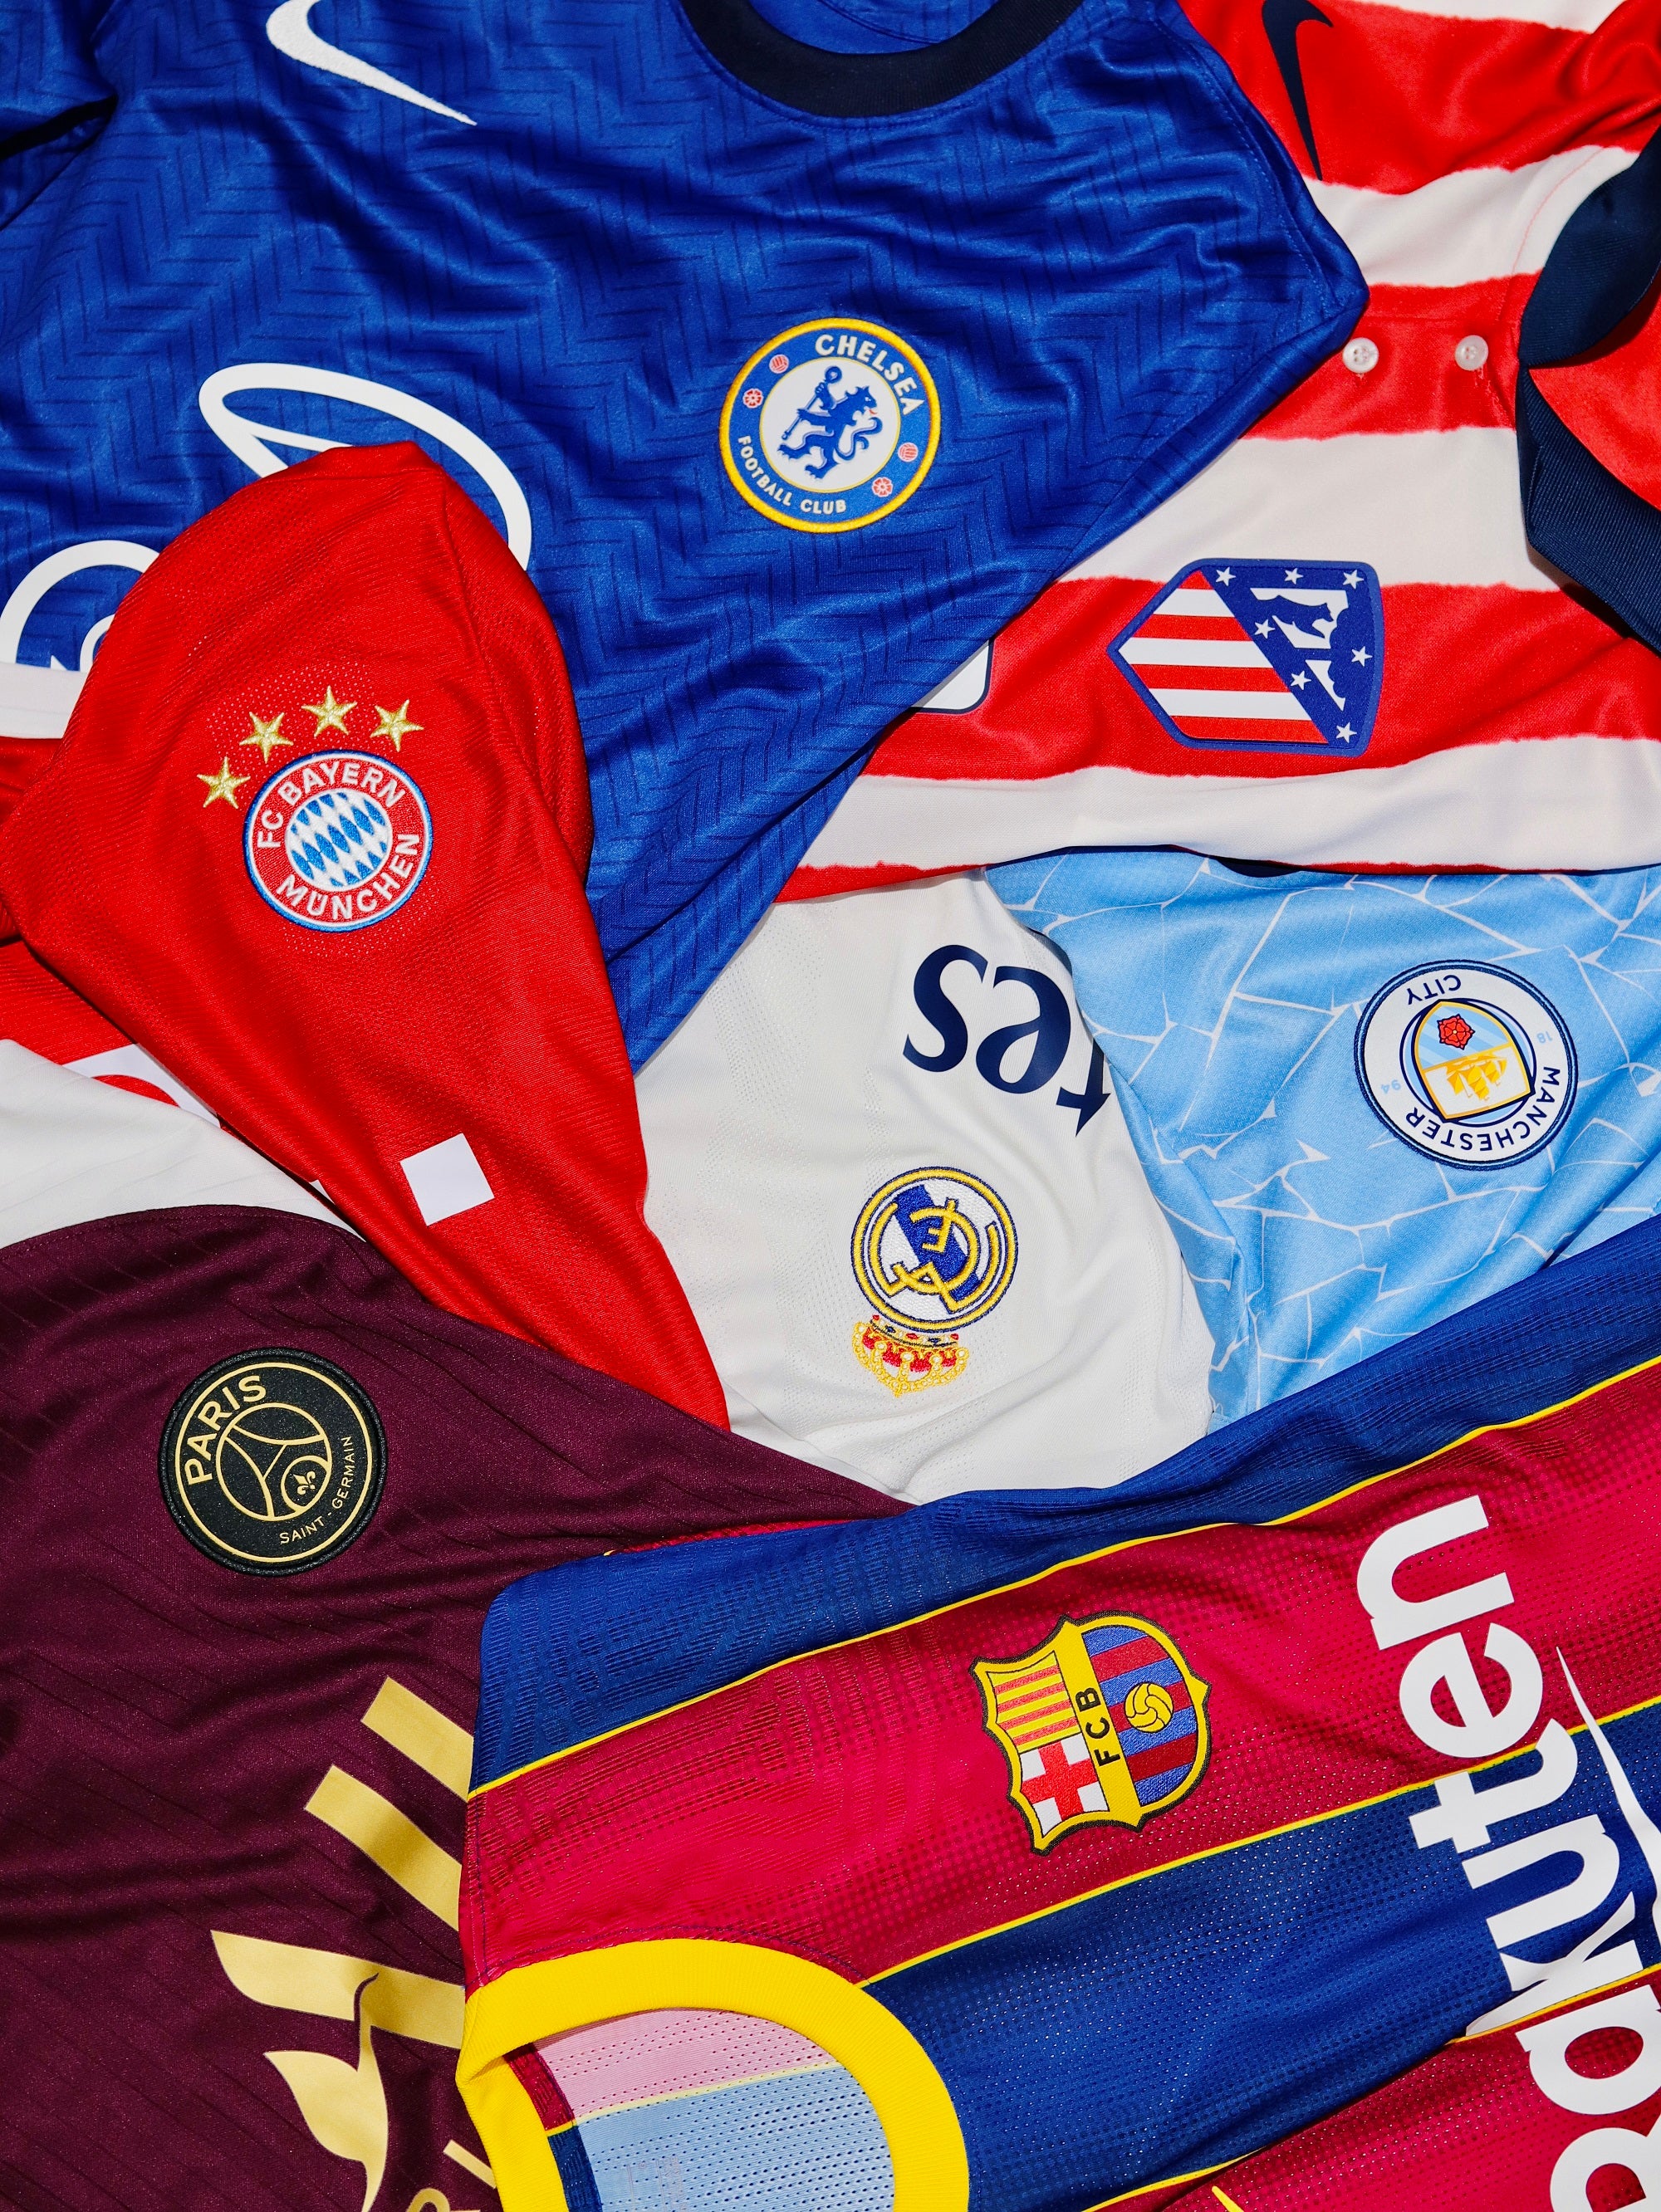 replica soccer uniforms wholesale